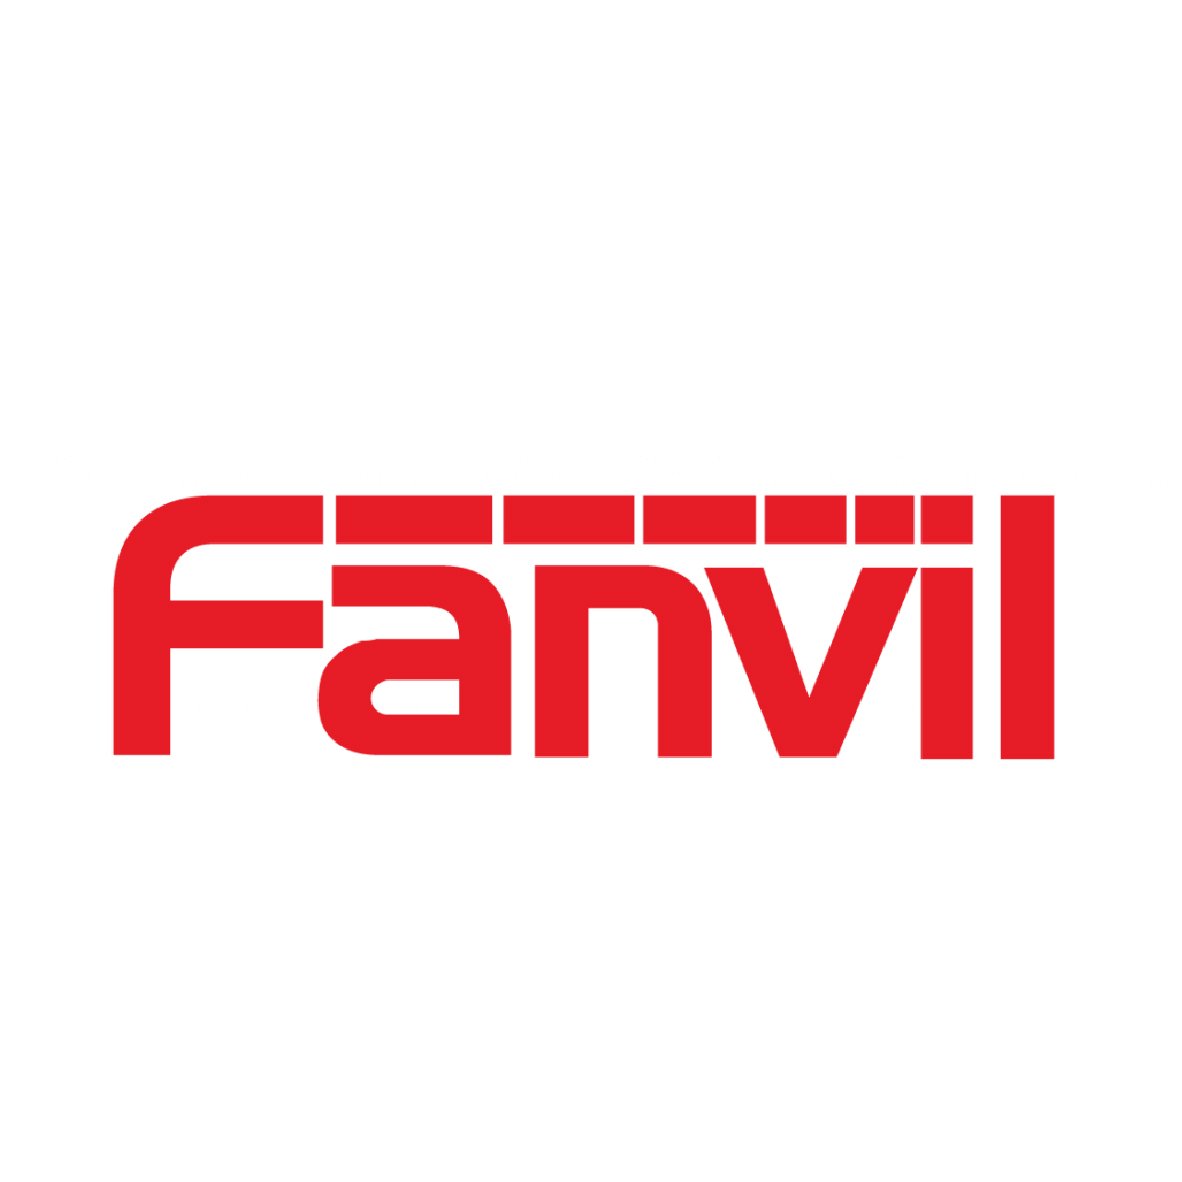 voip-logo-FANVIL